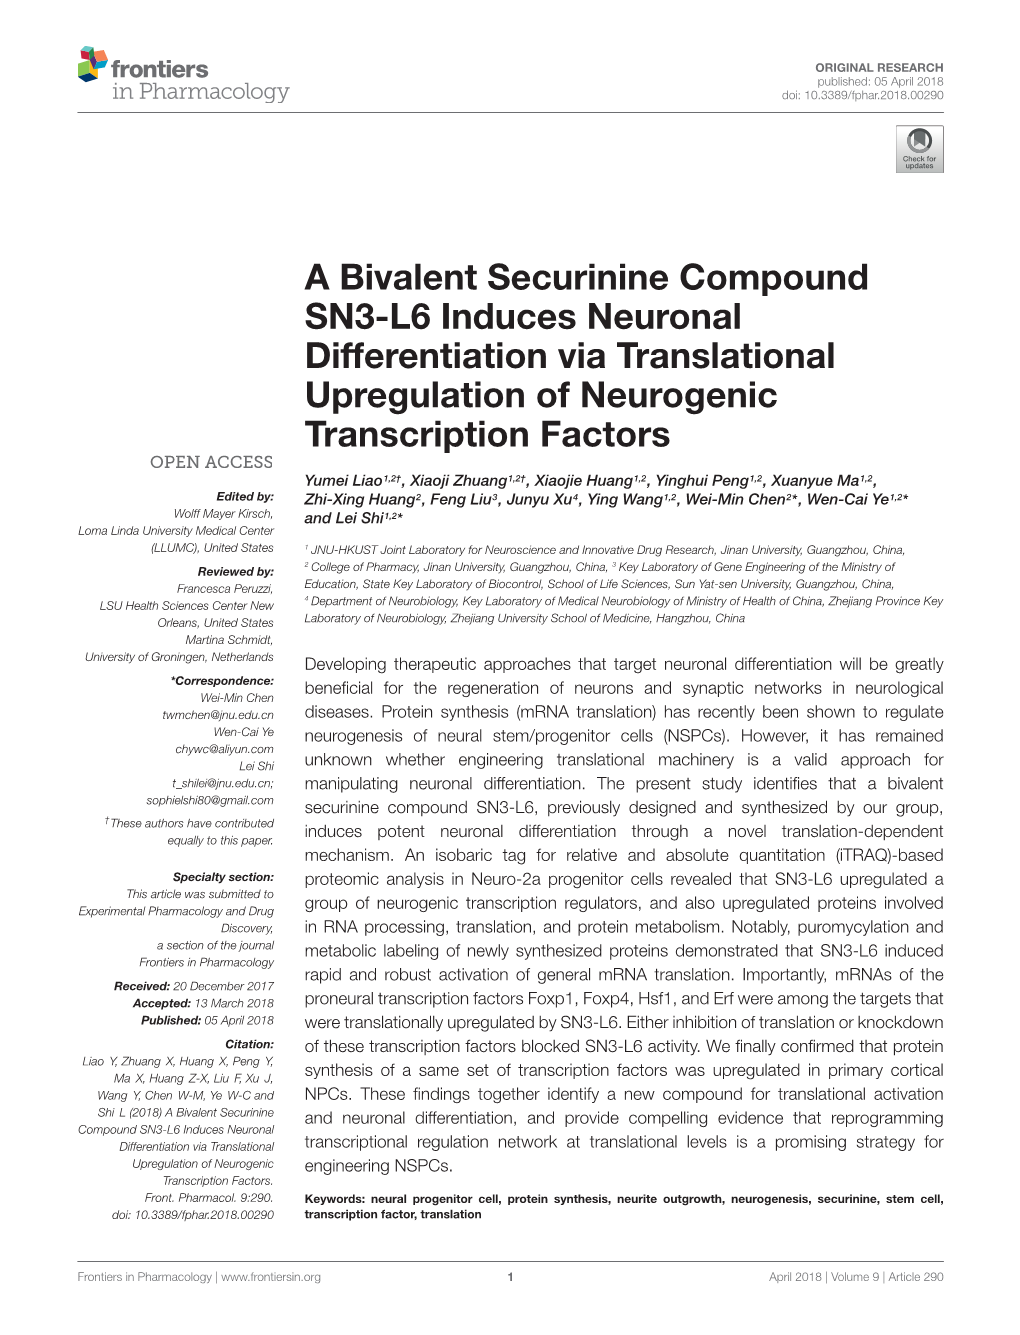 A Bivalent Securinine Compound SN3-L6 Induces Neuronal Differentiation Via Translational Upregulation of Neurogenic Transcription Factors